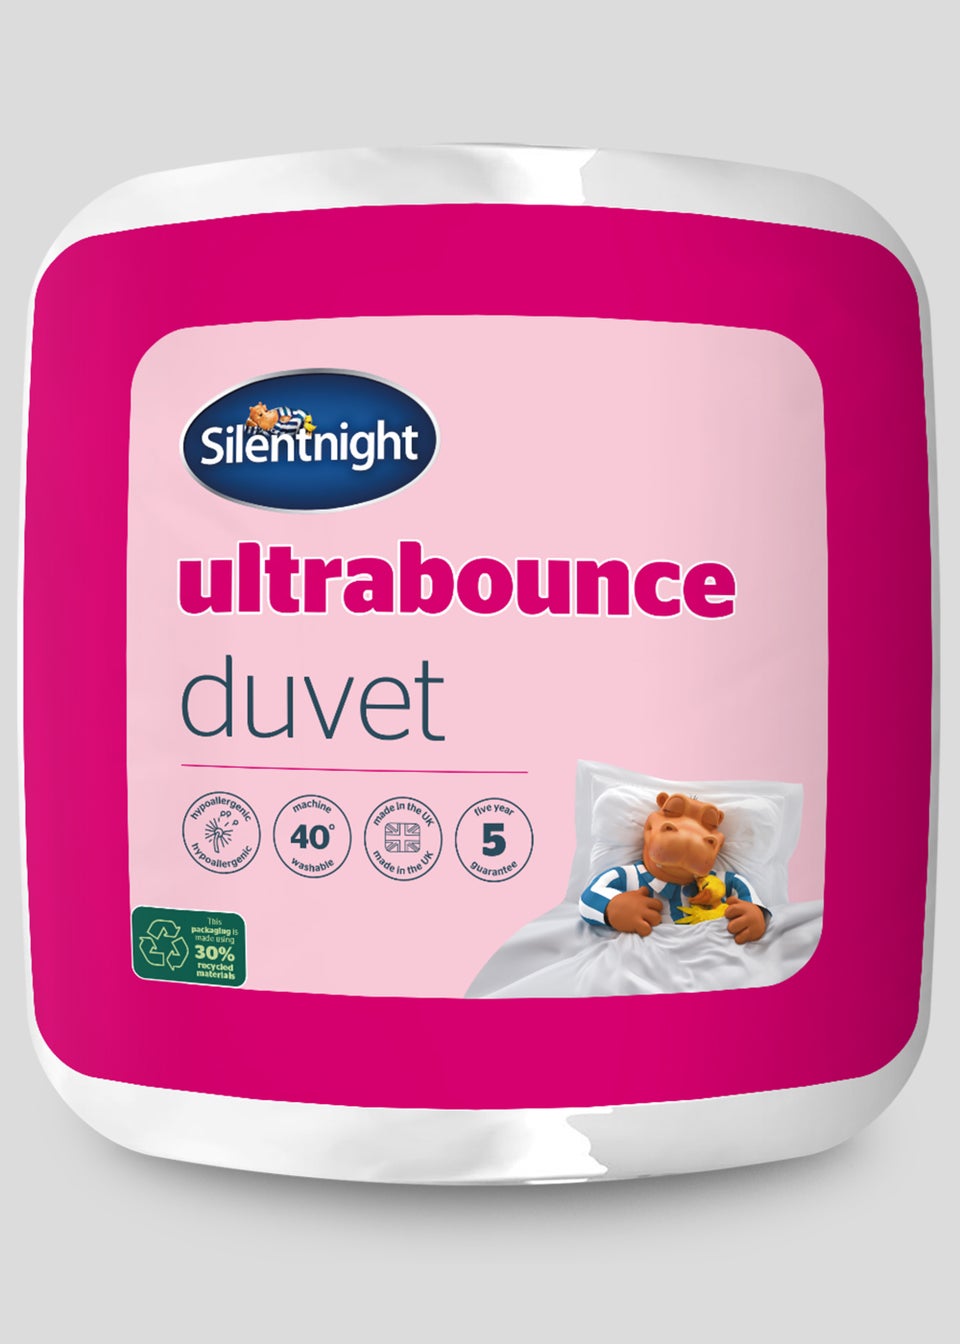 Silentnight Ultrabounce Duvet (13.5 Tog)